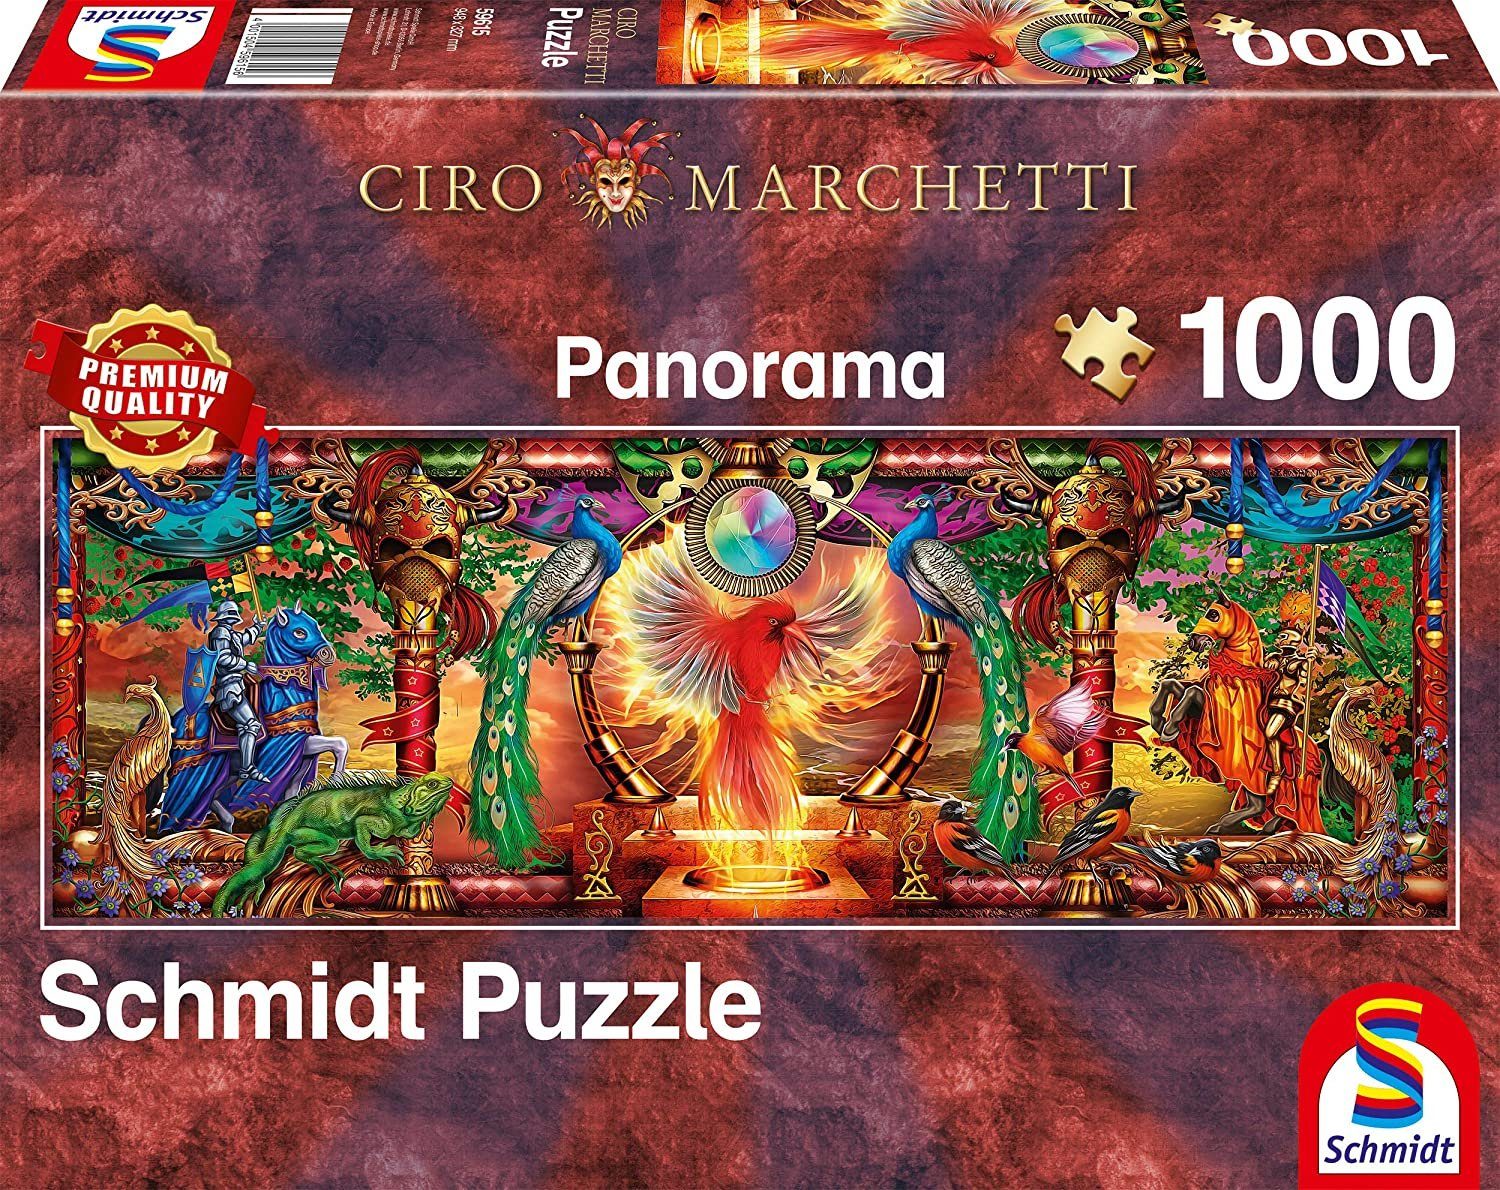 Schmidt Spiele Puzzle Reich Quality Panorama-Puzzle, - des Ciro Im Feuervogels, Schmidt Marchetti - - 59615 Puzzleteile 1000 1000 Teile Premium